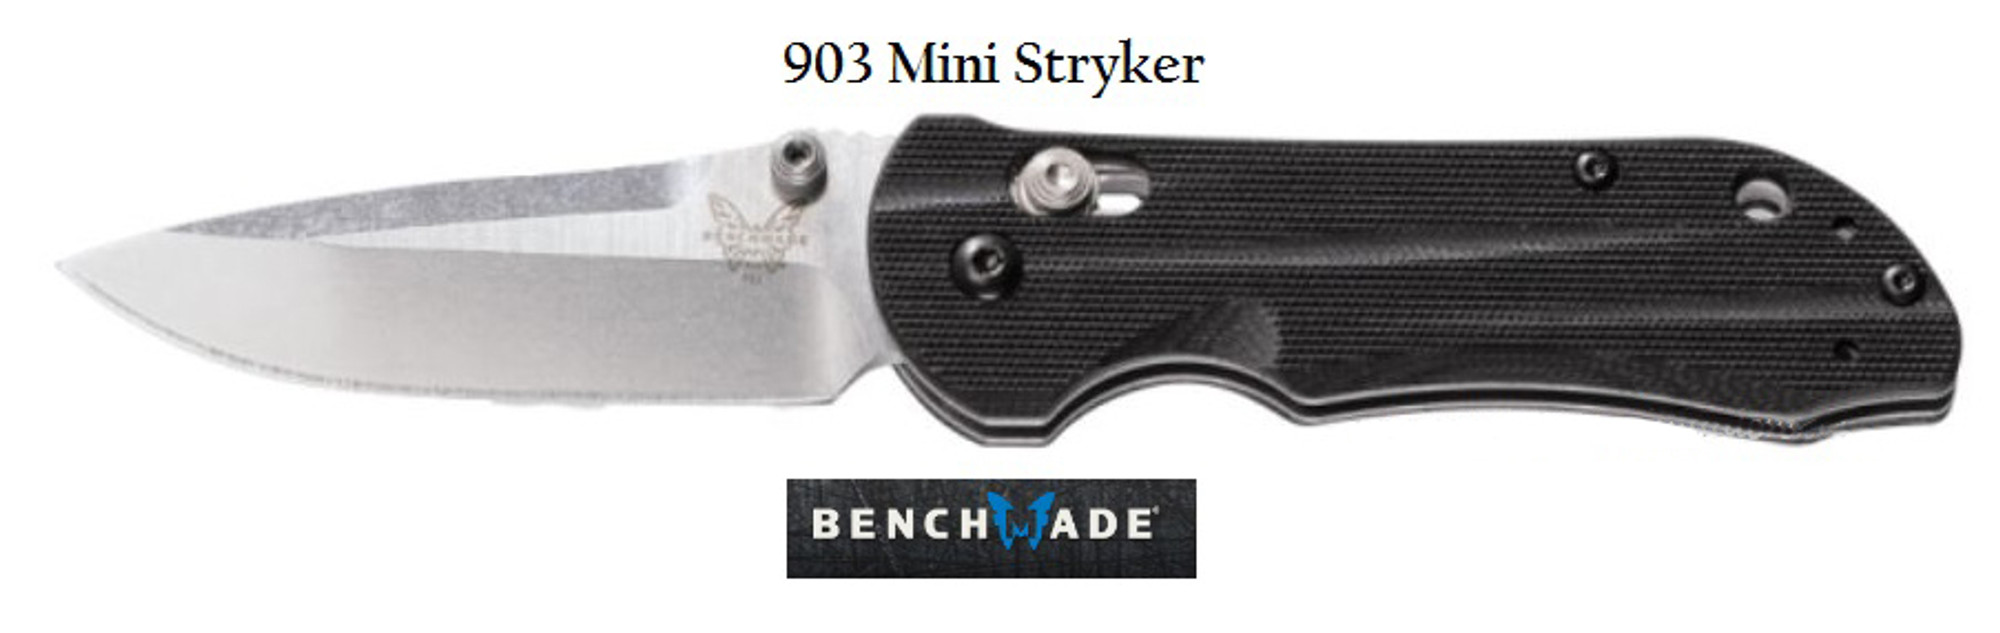 Benchmade 903 Mini Stryker Plain Edge